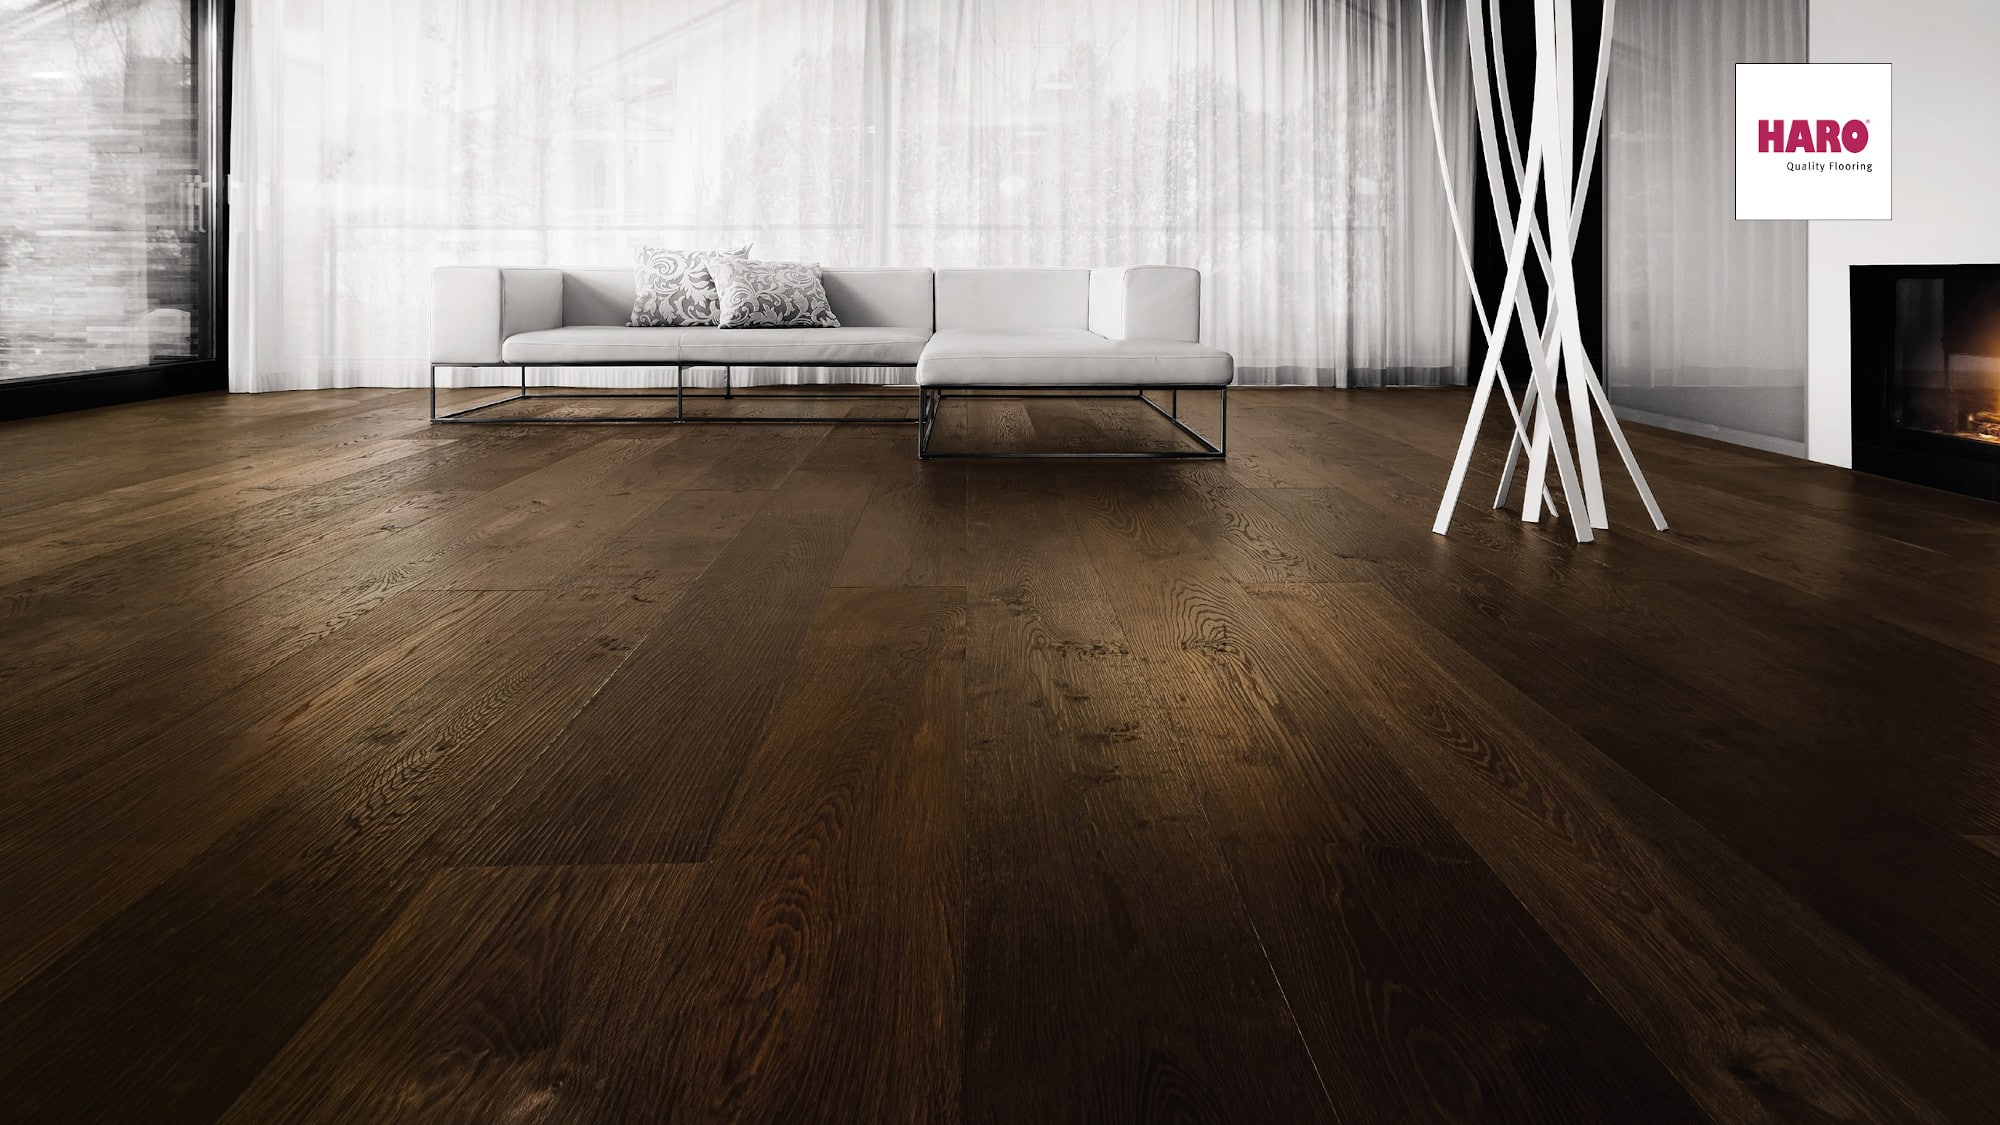 Haro Flooring New Zealand Premium Timber Flooring Made In Germany